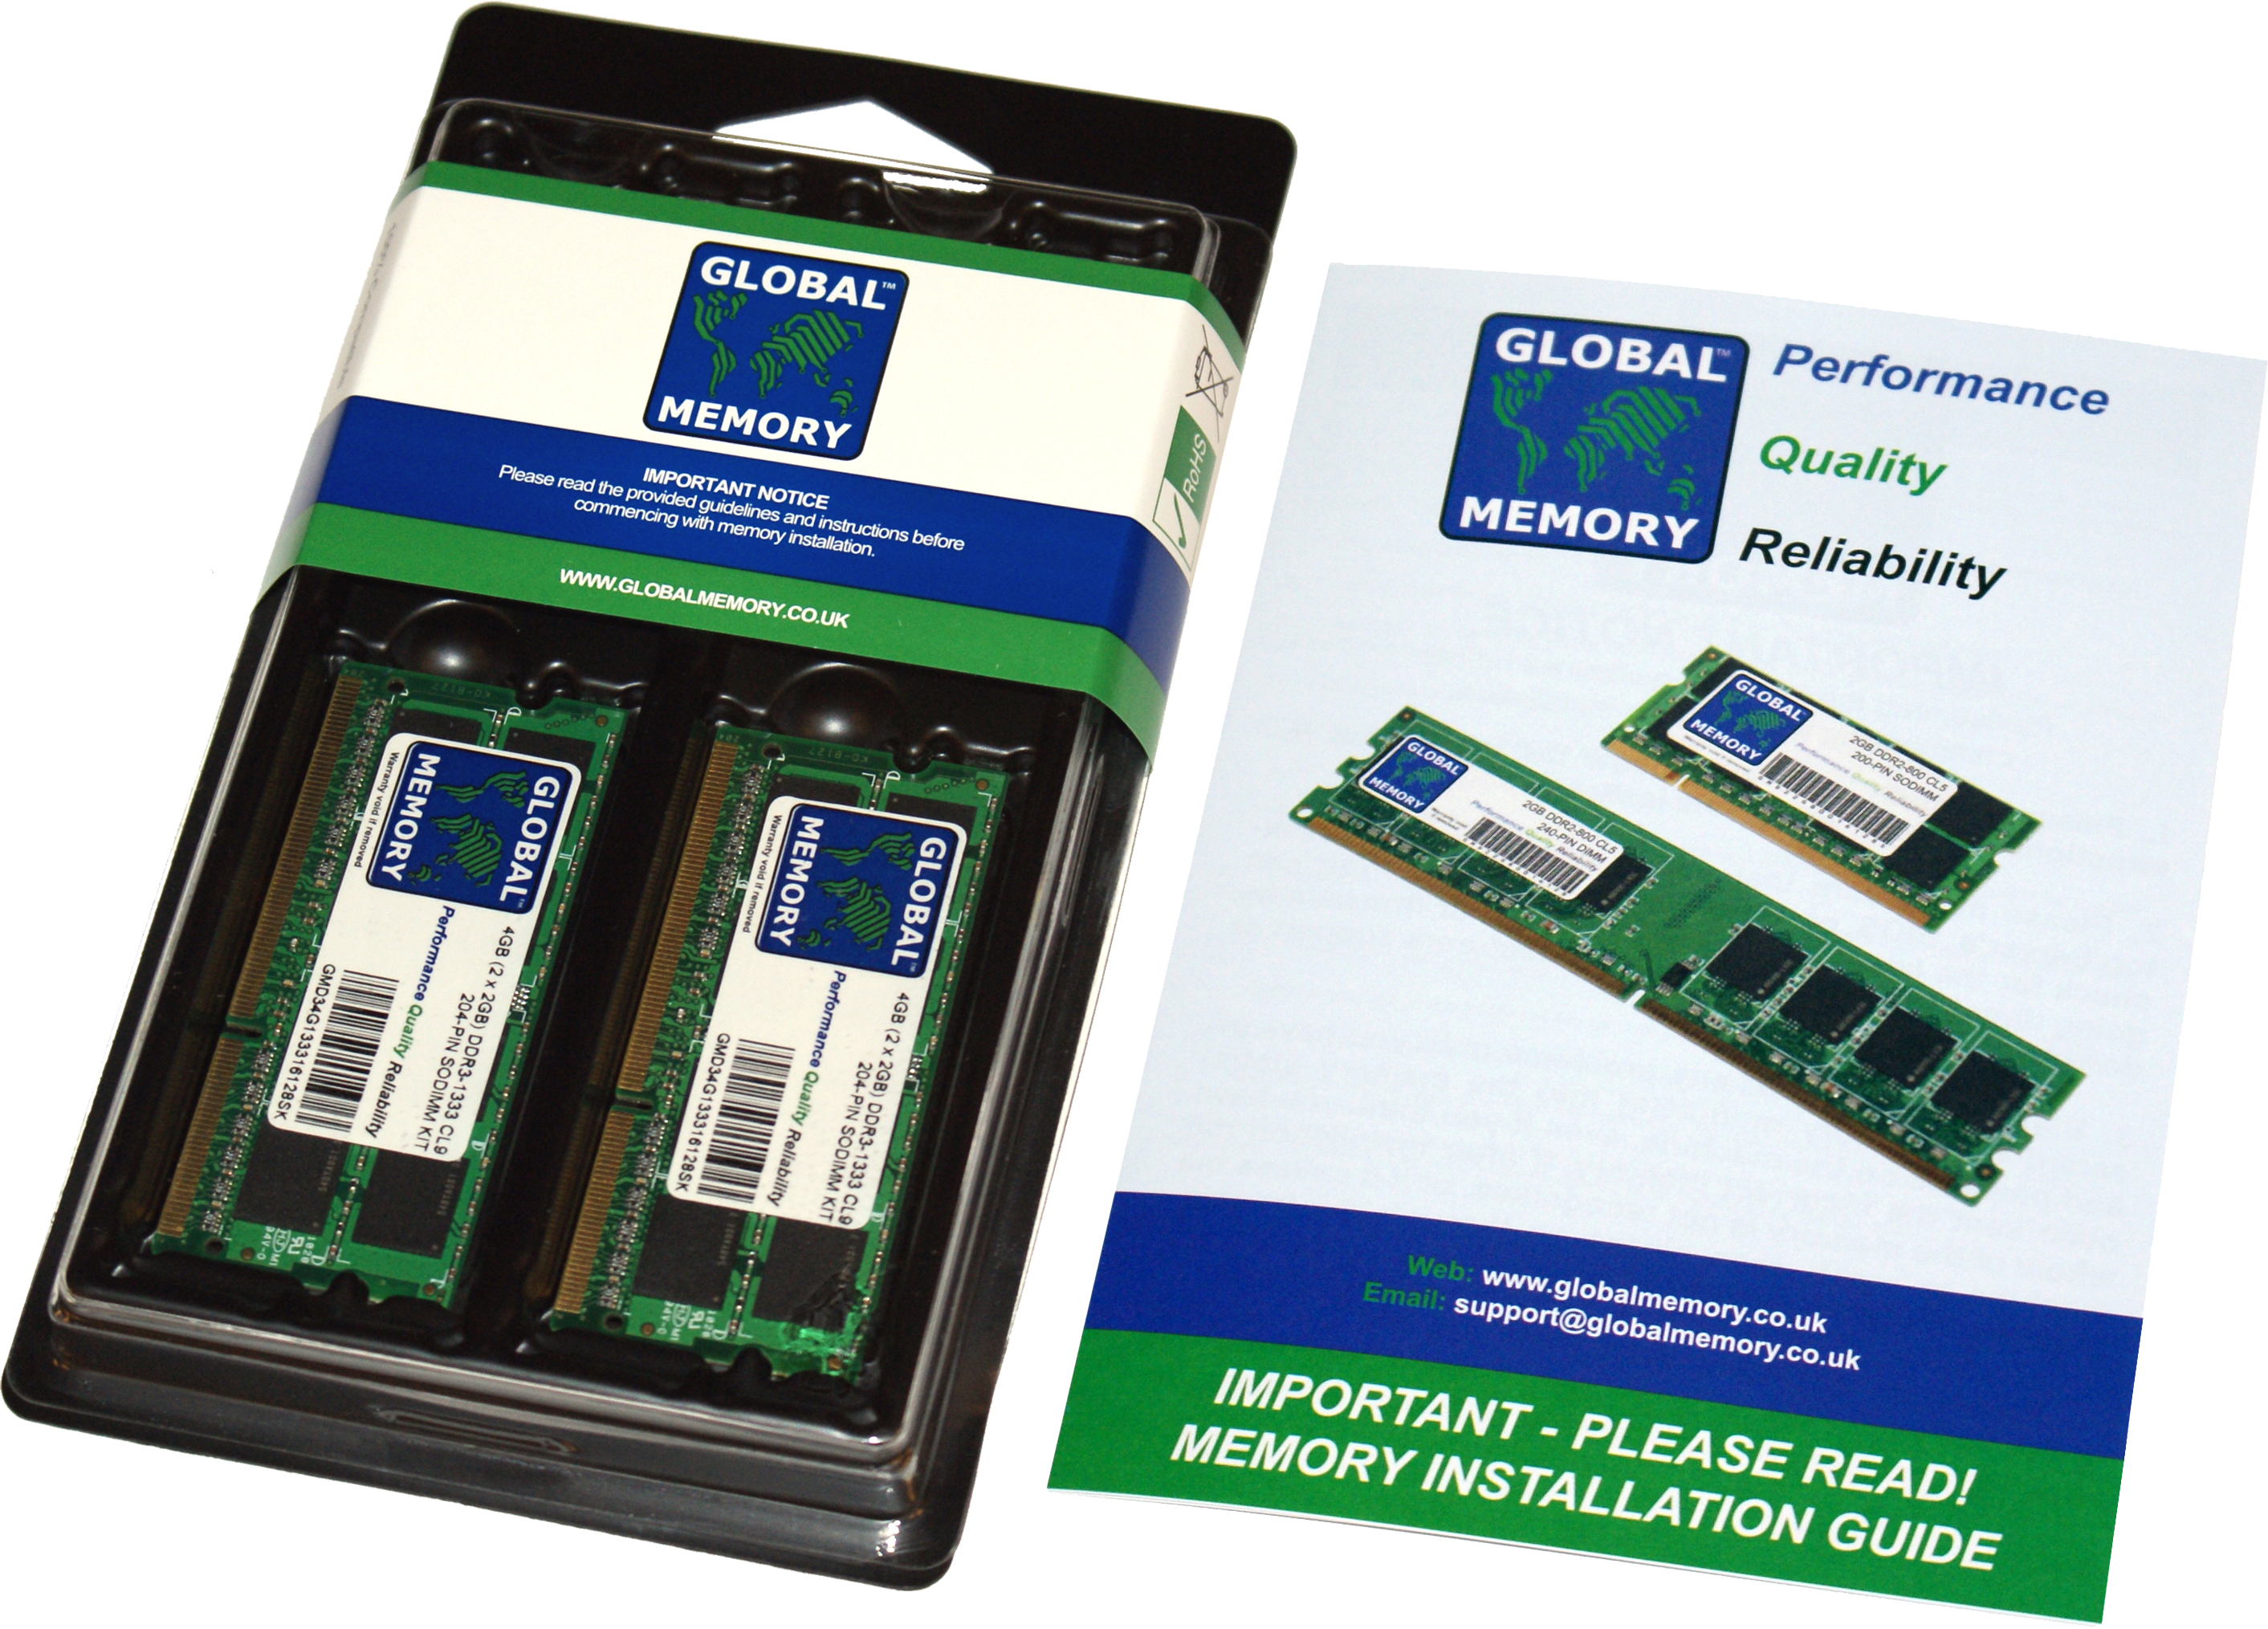 8GB (2 x 4GB) DDR3 1866MHz PC3-14900 204-PIN SODIMM MEMORY RAM KIT FOR LENOVO LAPTOPS/NOTEBOOKS